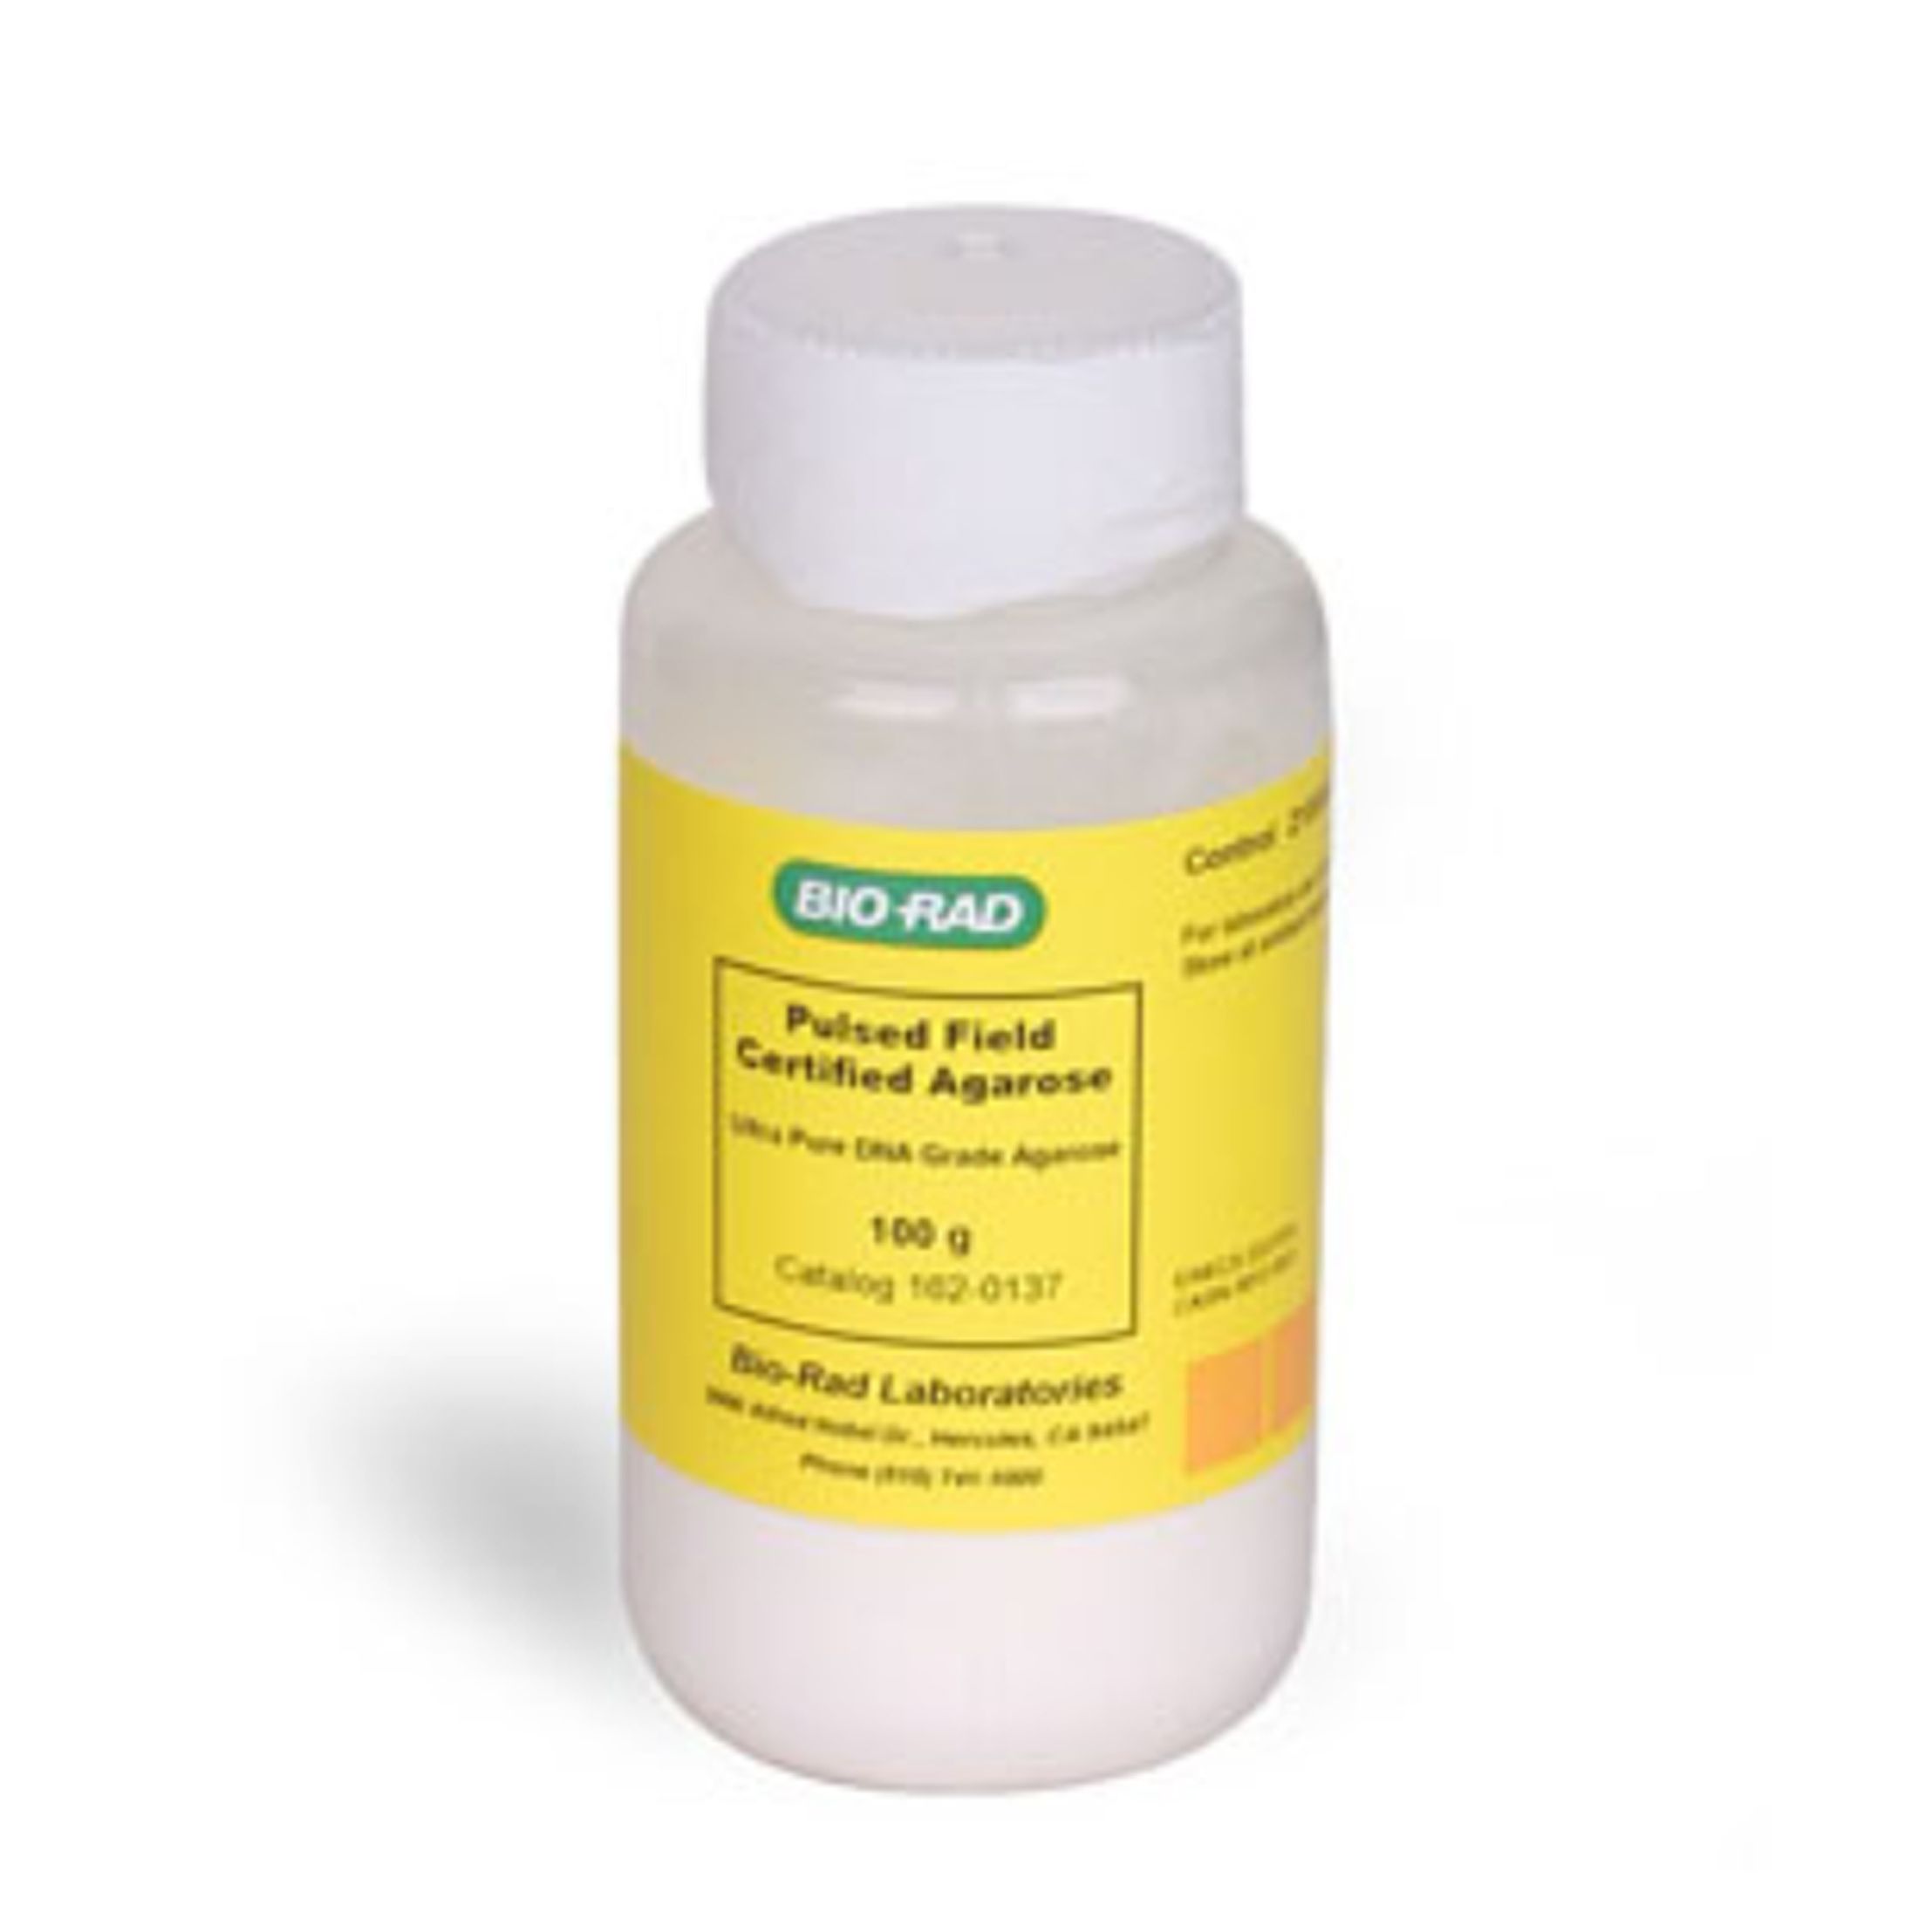 伯乐Bio-Rad1620137脉冲场认证琼脂糖Pulsed Field Certified Agarose, 100 g， 